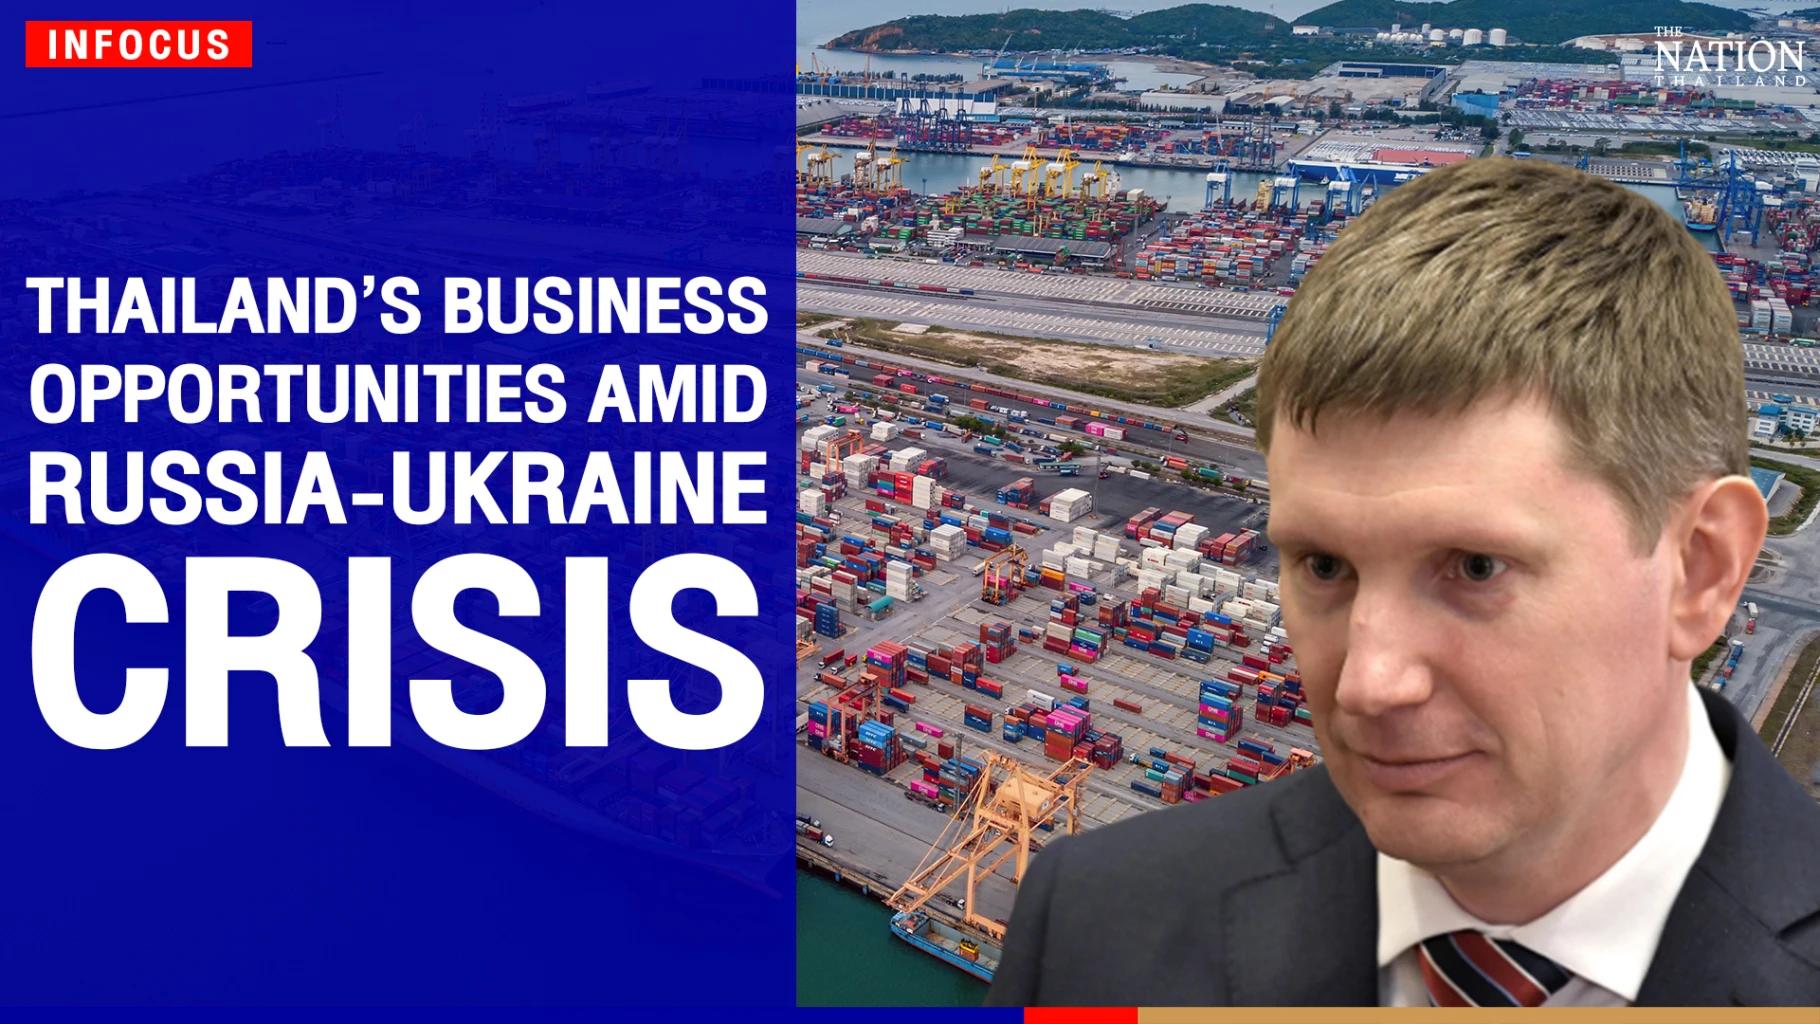 Thailand’s business opportunities amid Russia-Ukraine crisis